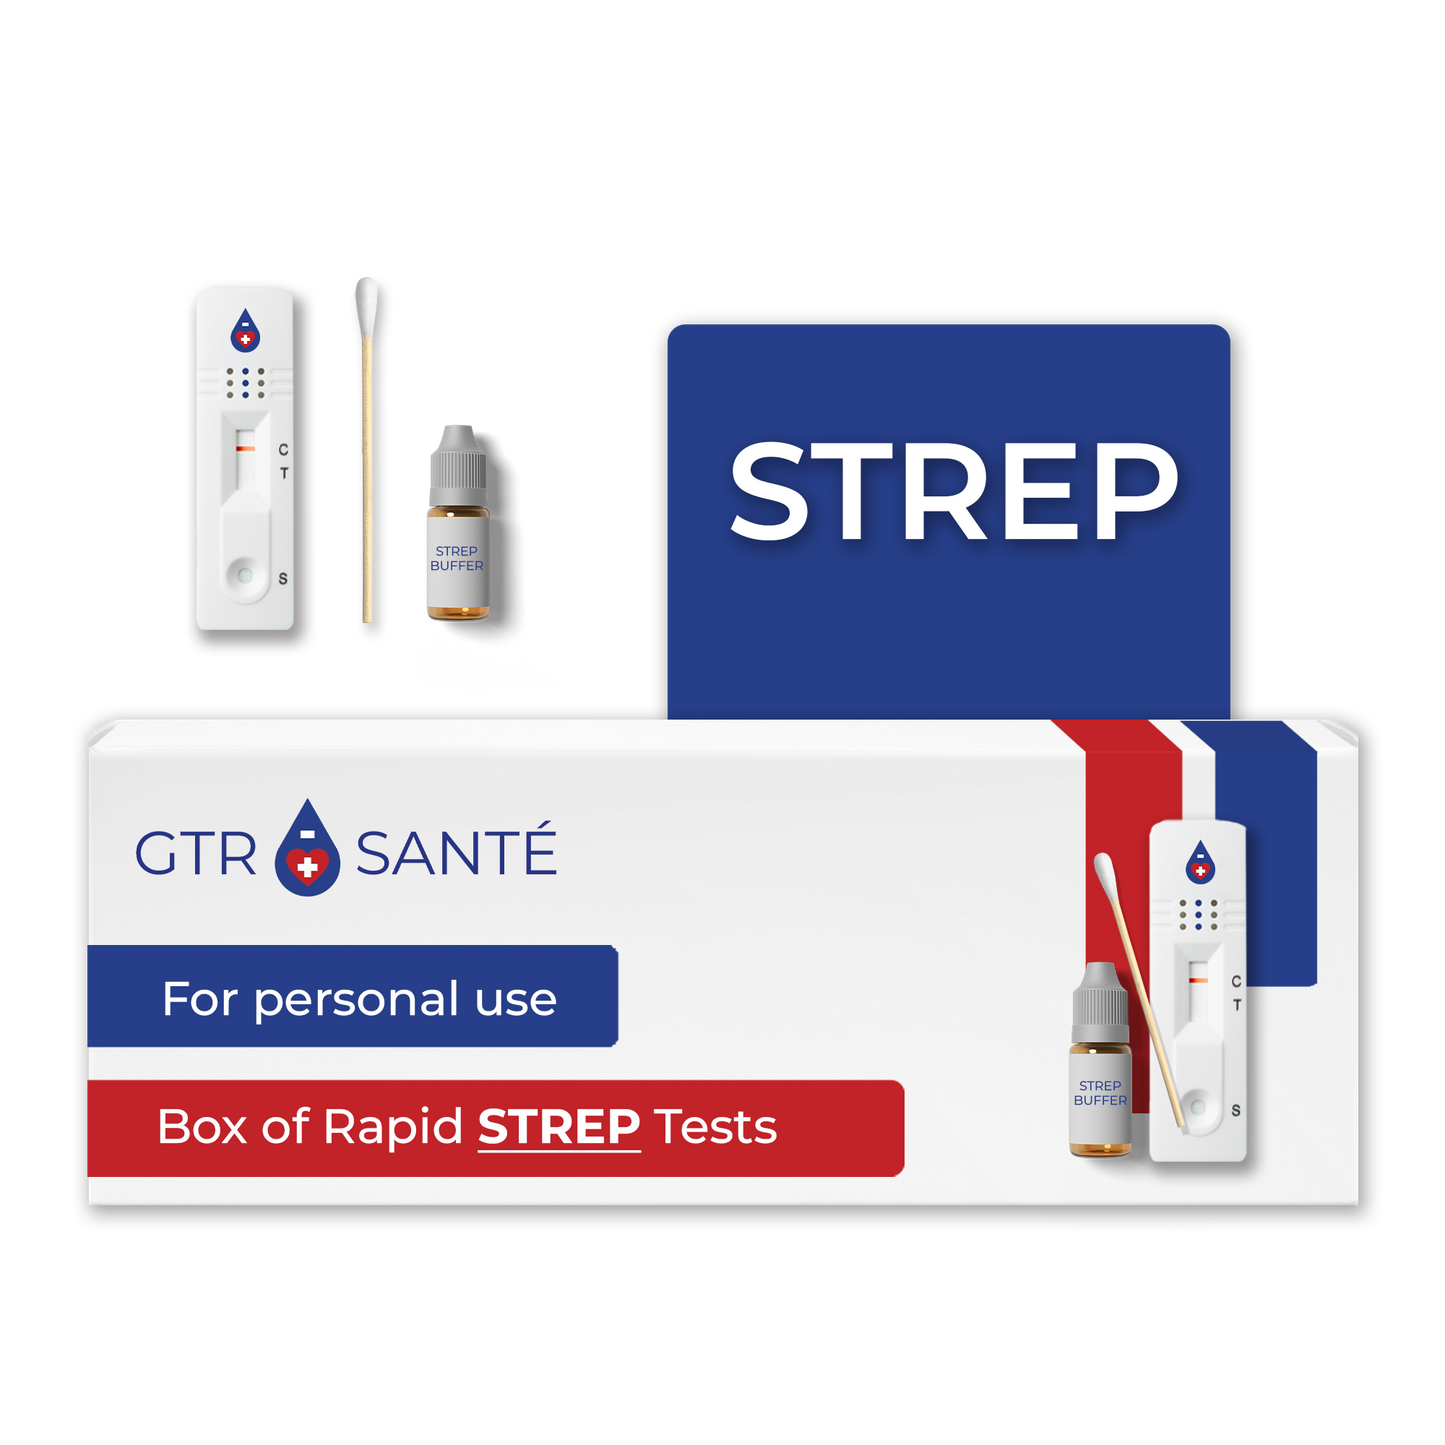 Rapid STREP Tests